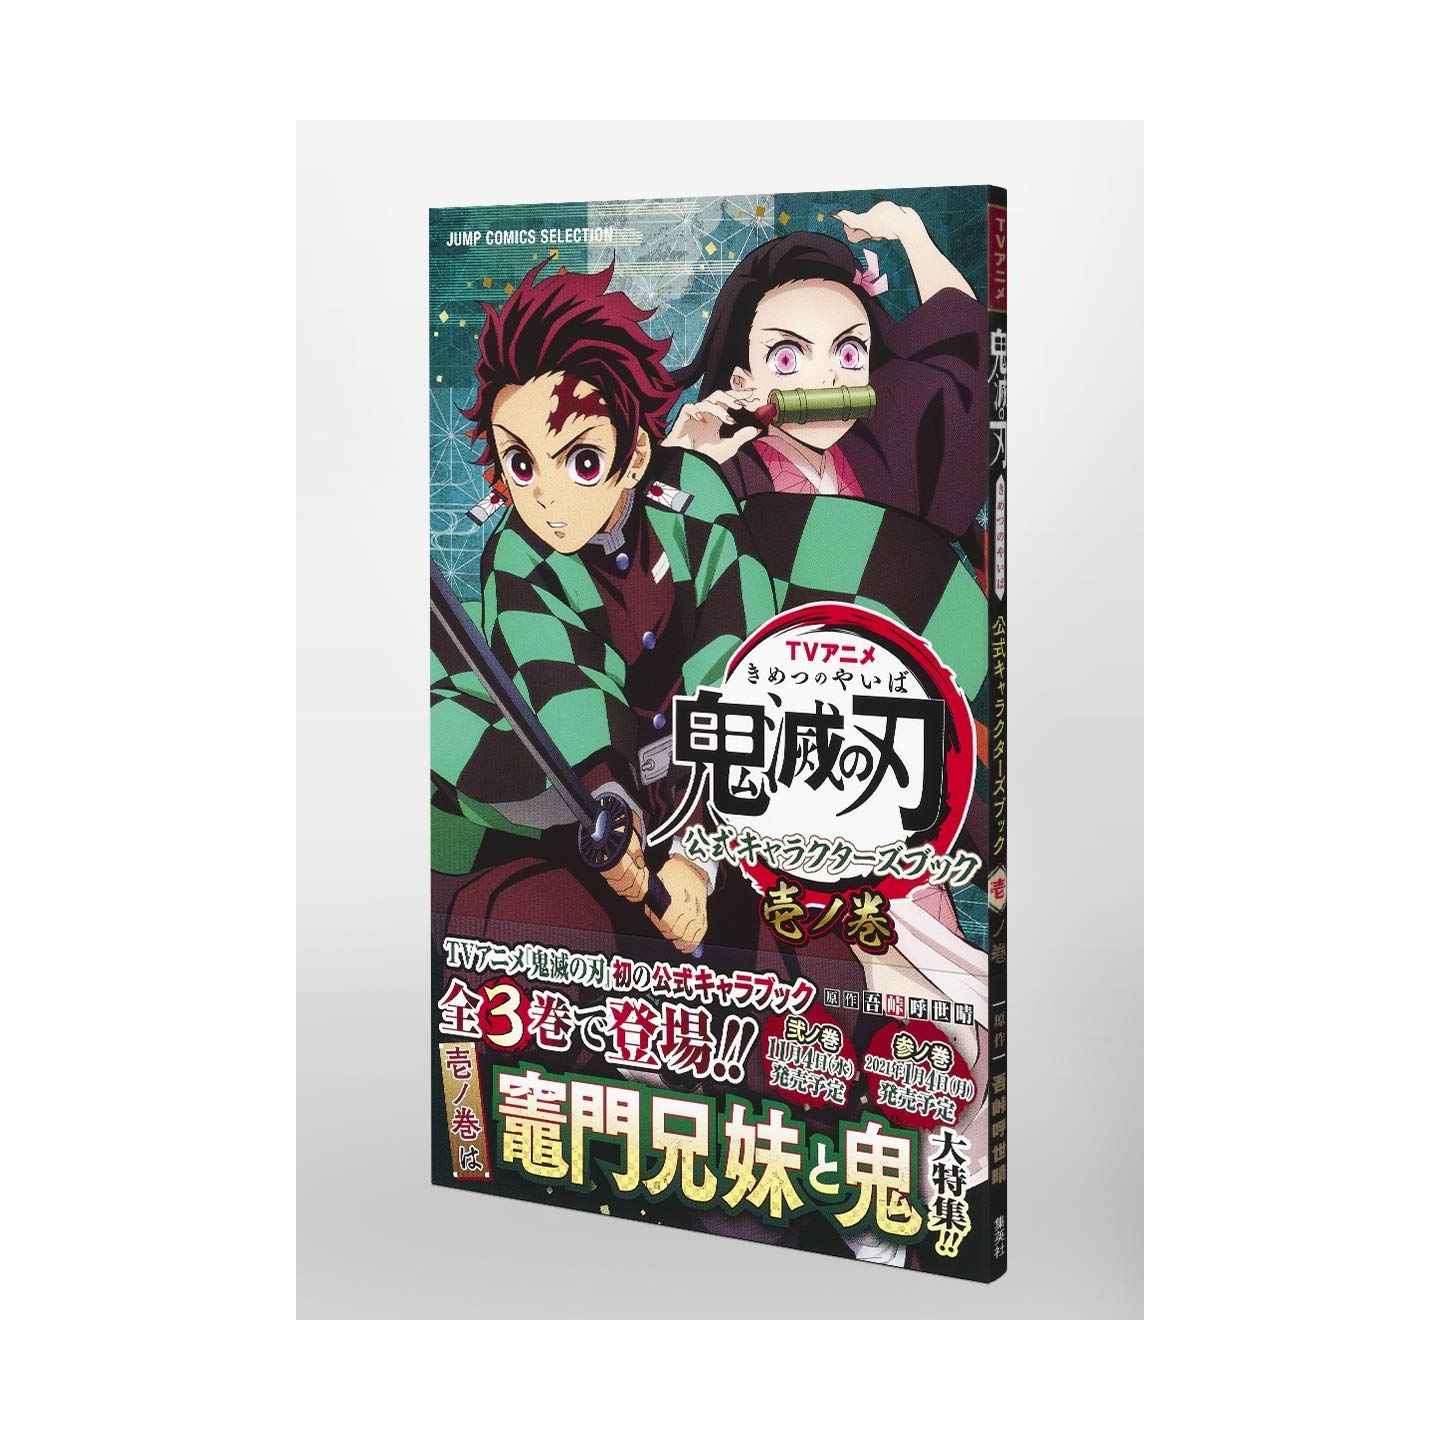 Kimetsu no Yaiba (Demon Slayer) - TV Animation - Characters book Vol. 2